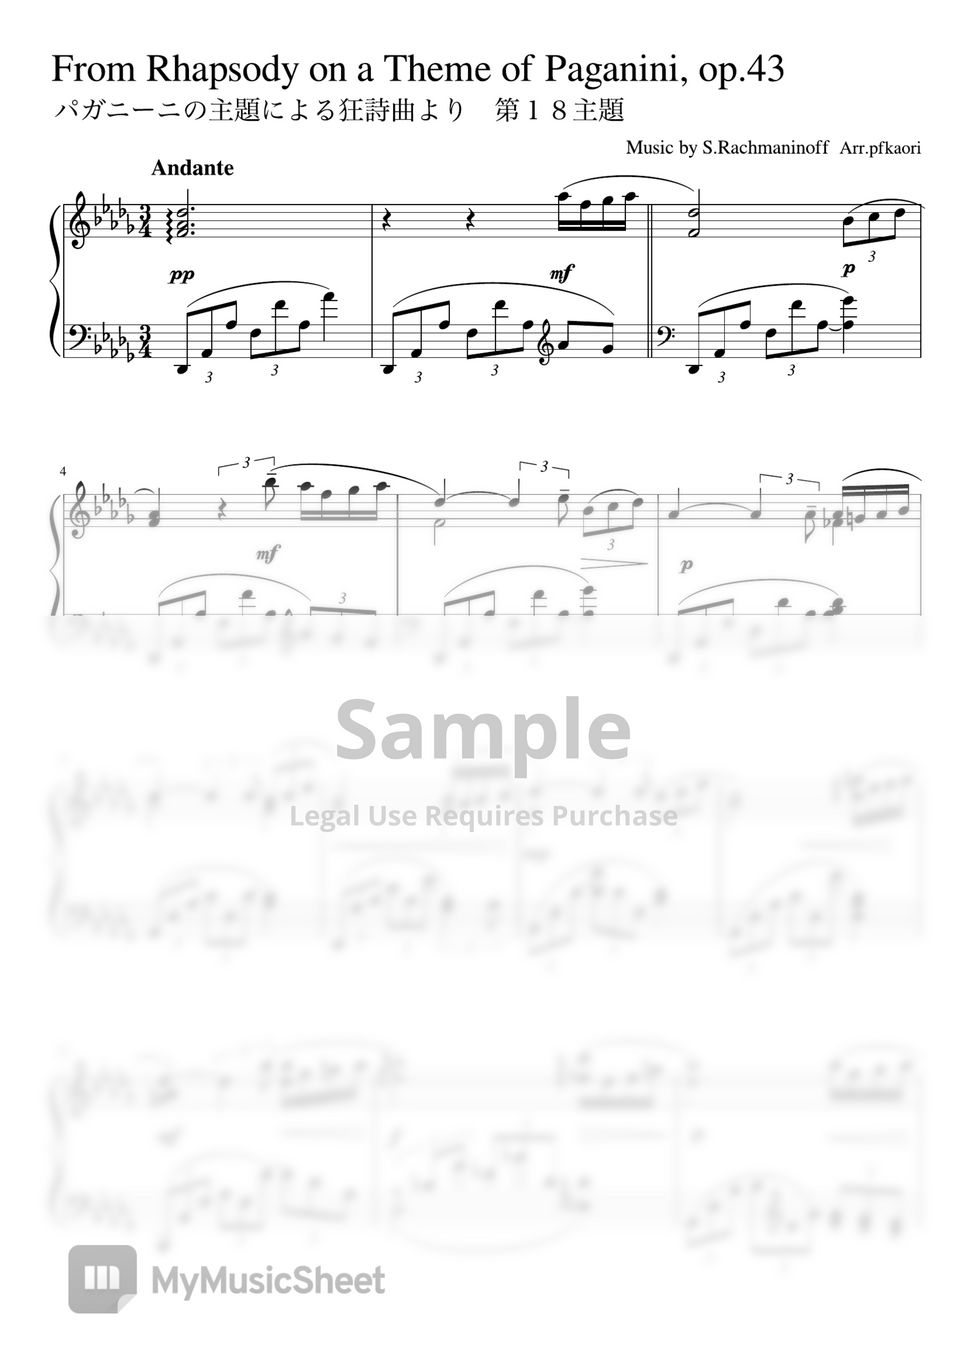 S.Rakhmaninov - Vasil'evich:Rapsodie sur un thème de Paganini Op.43 pour Piano et Orchestre (Des / Pianosolo beginner - intermadiate) by pfkaori